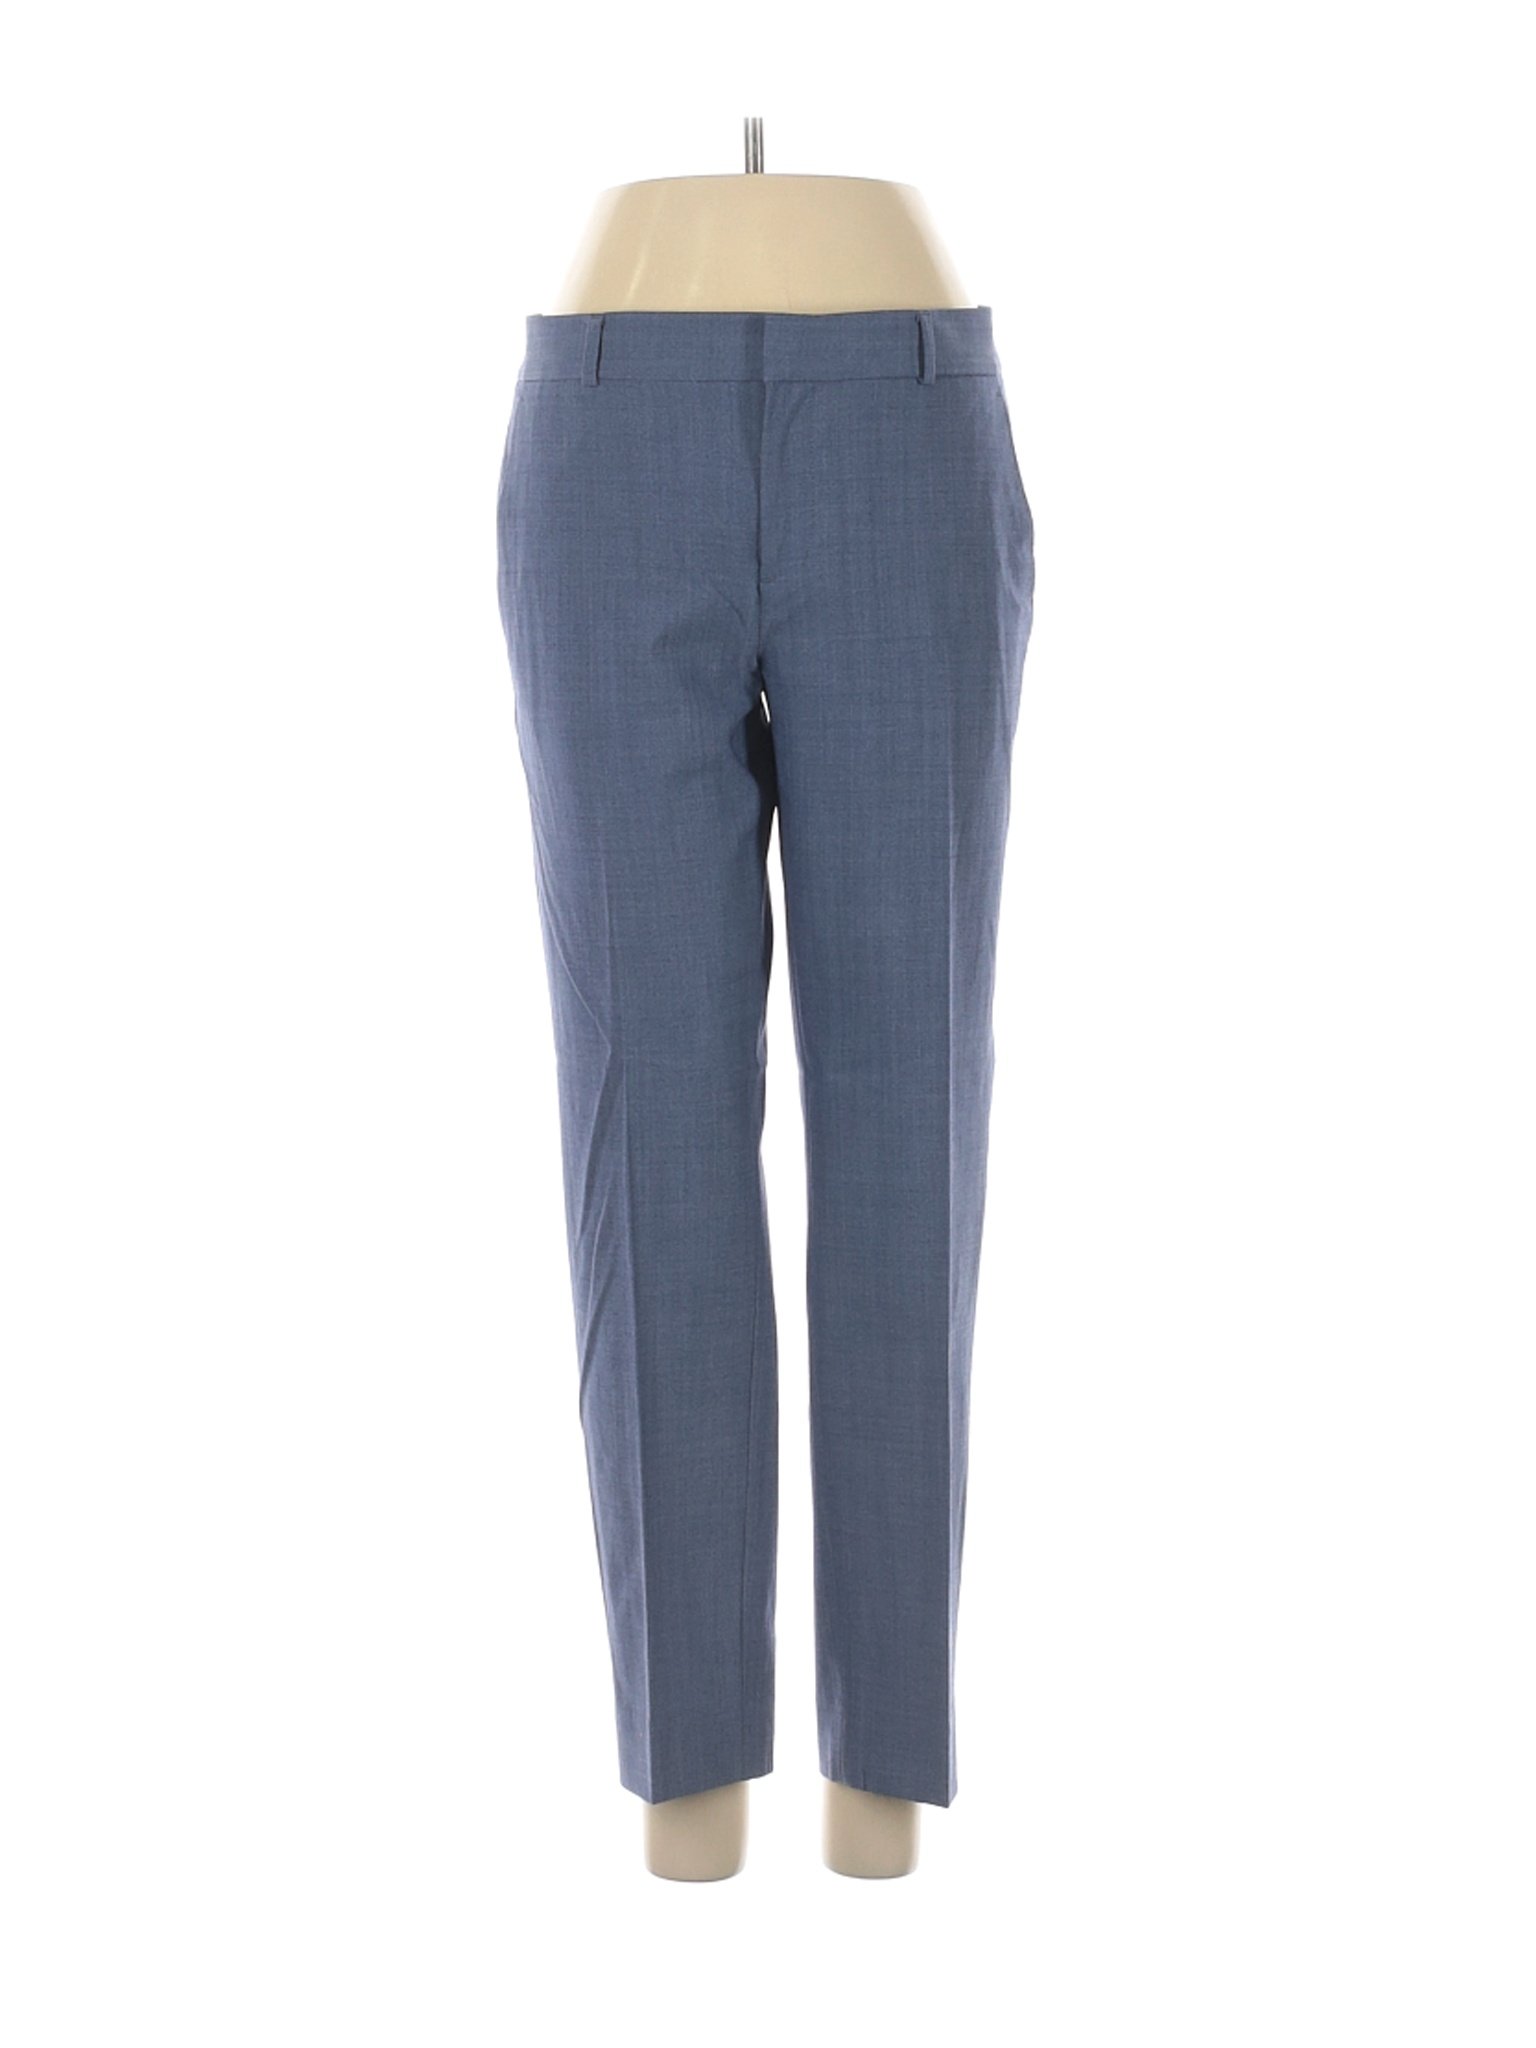 Banana Republic Solid Blue Wool Pants Size 4 - 86% off | thredUP